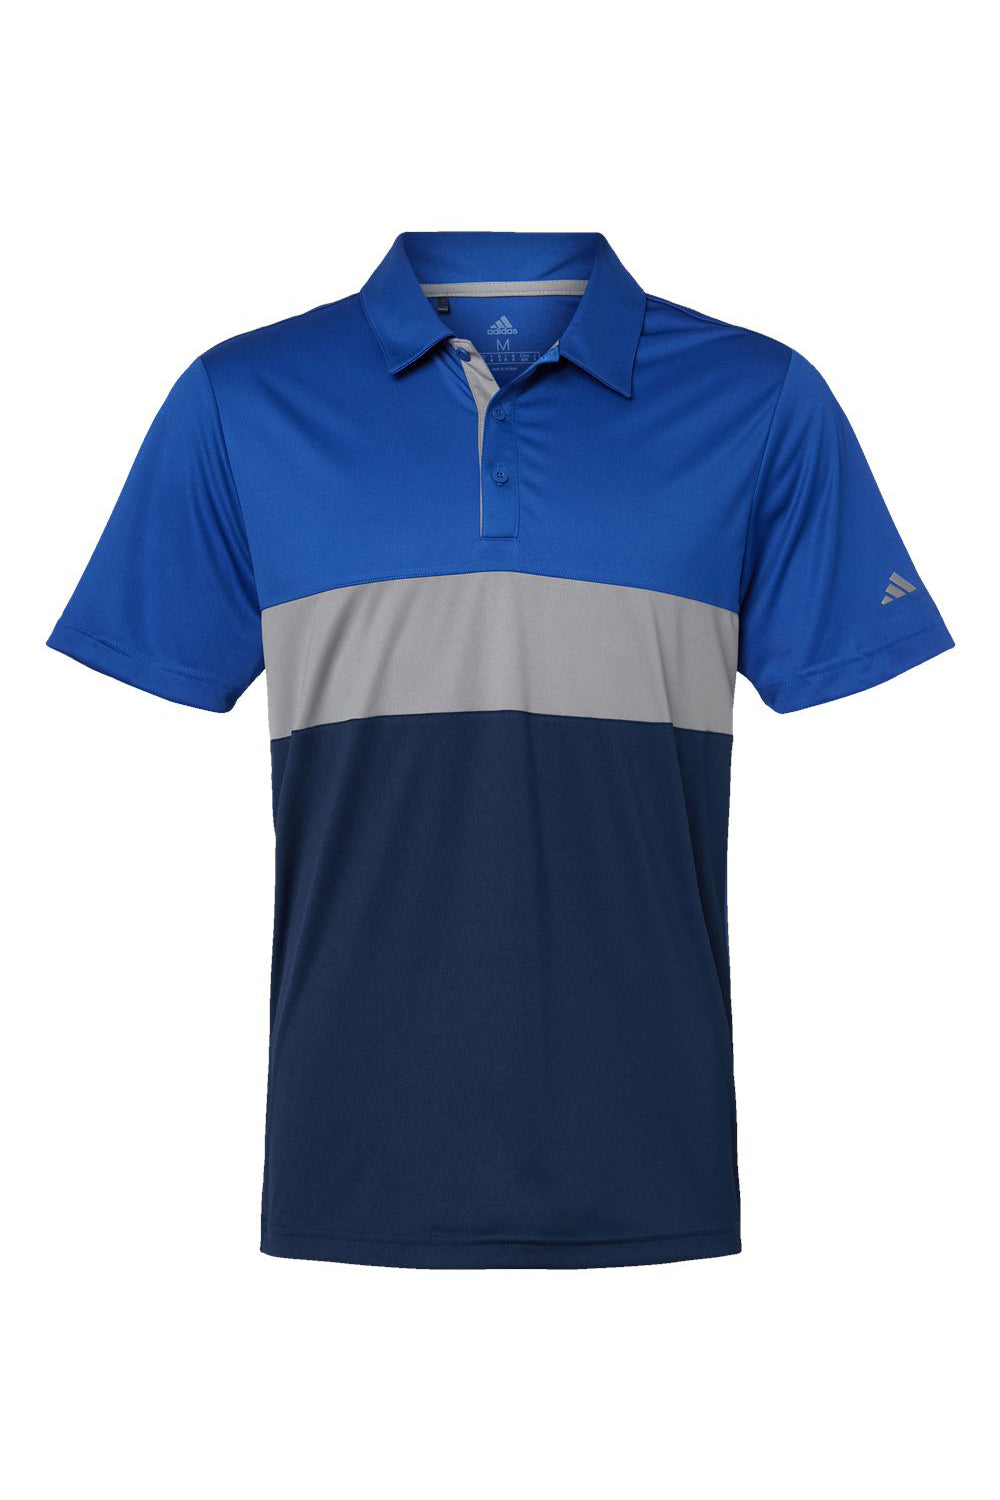 Adidas A236 Mens Merch Block Short Sleeve Polo Shirt Collegiate Royal Blue/Grey Flat Front